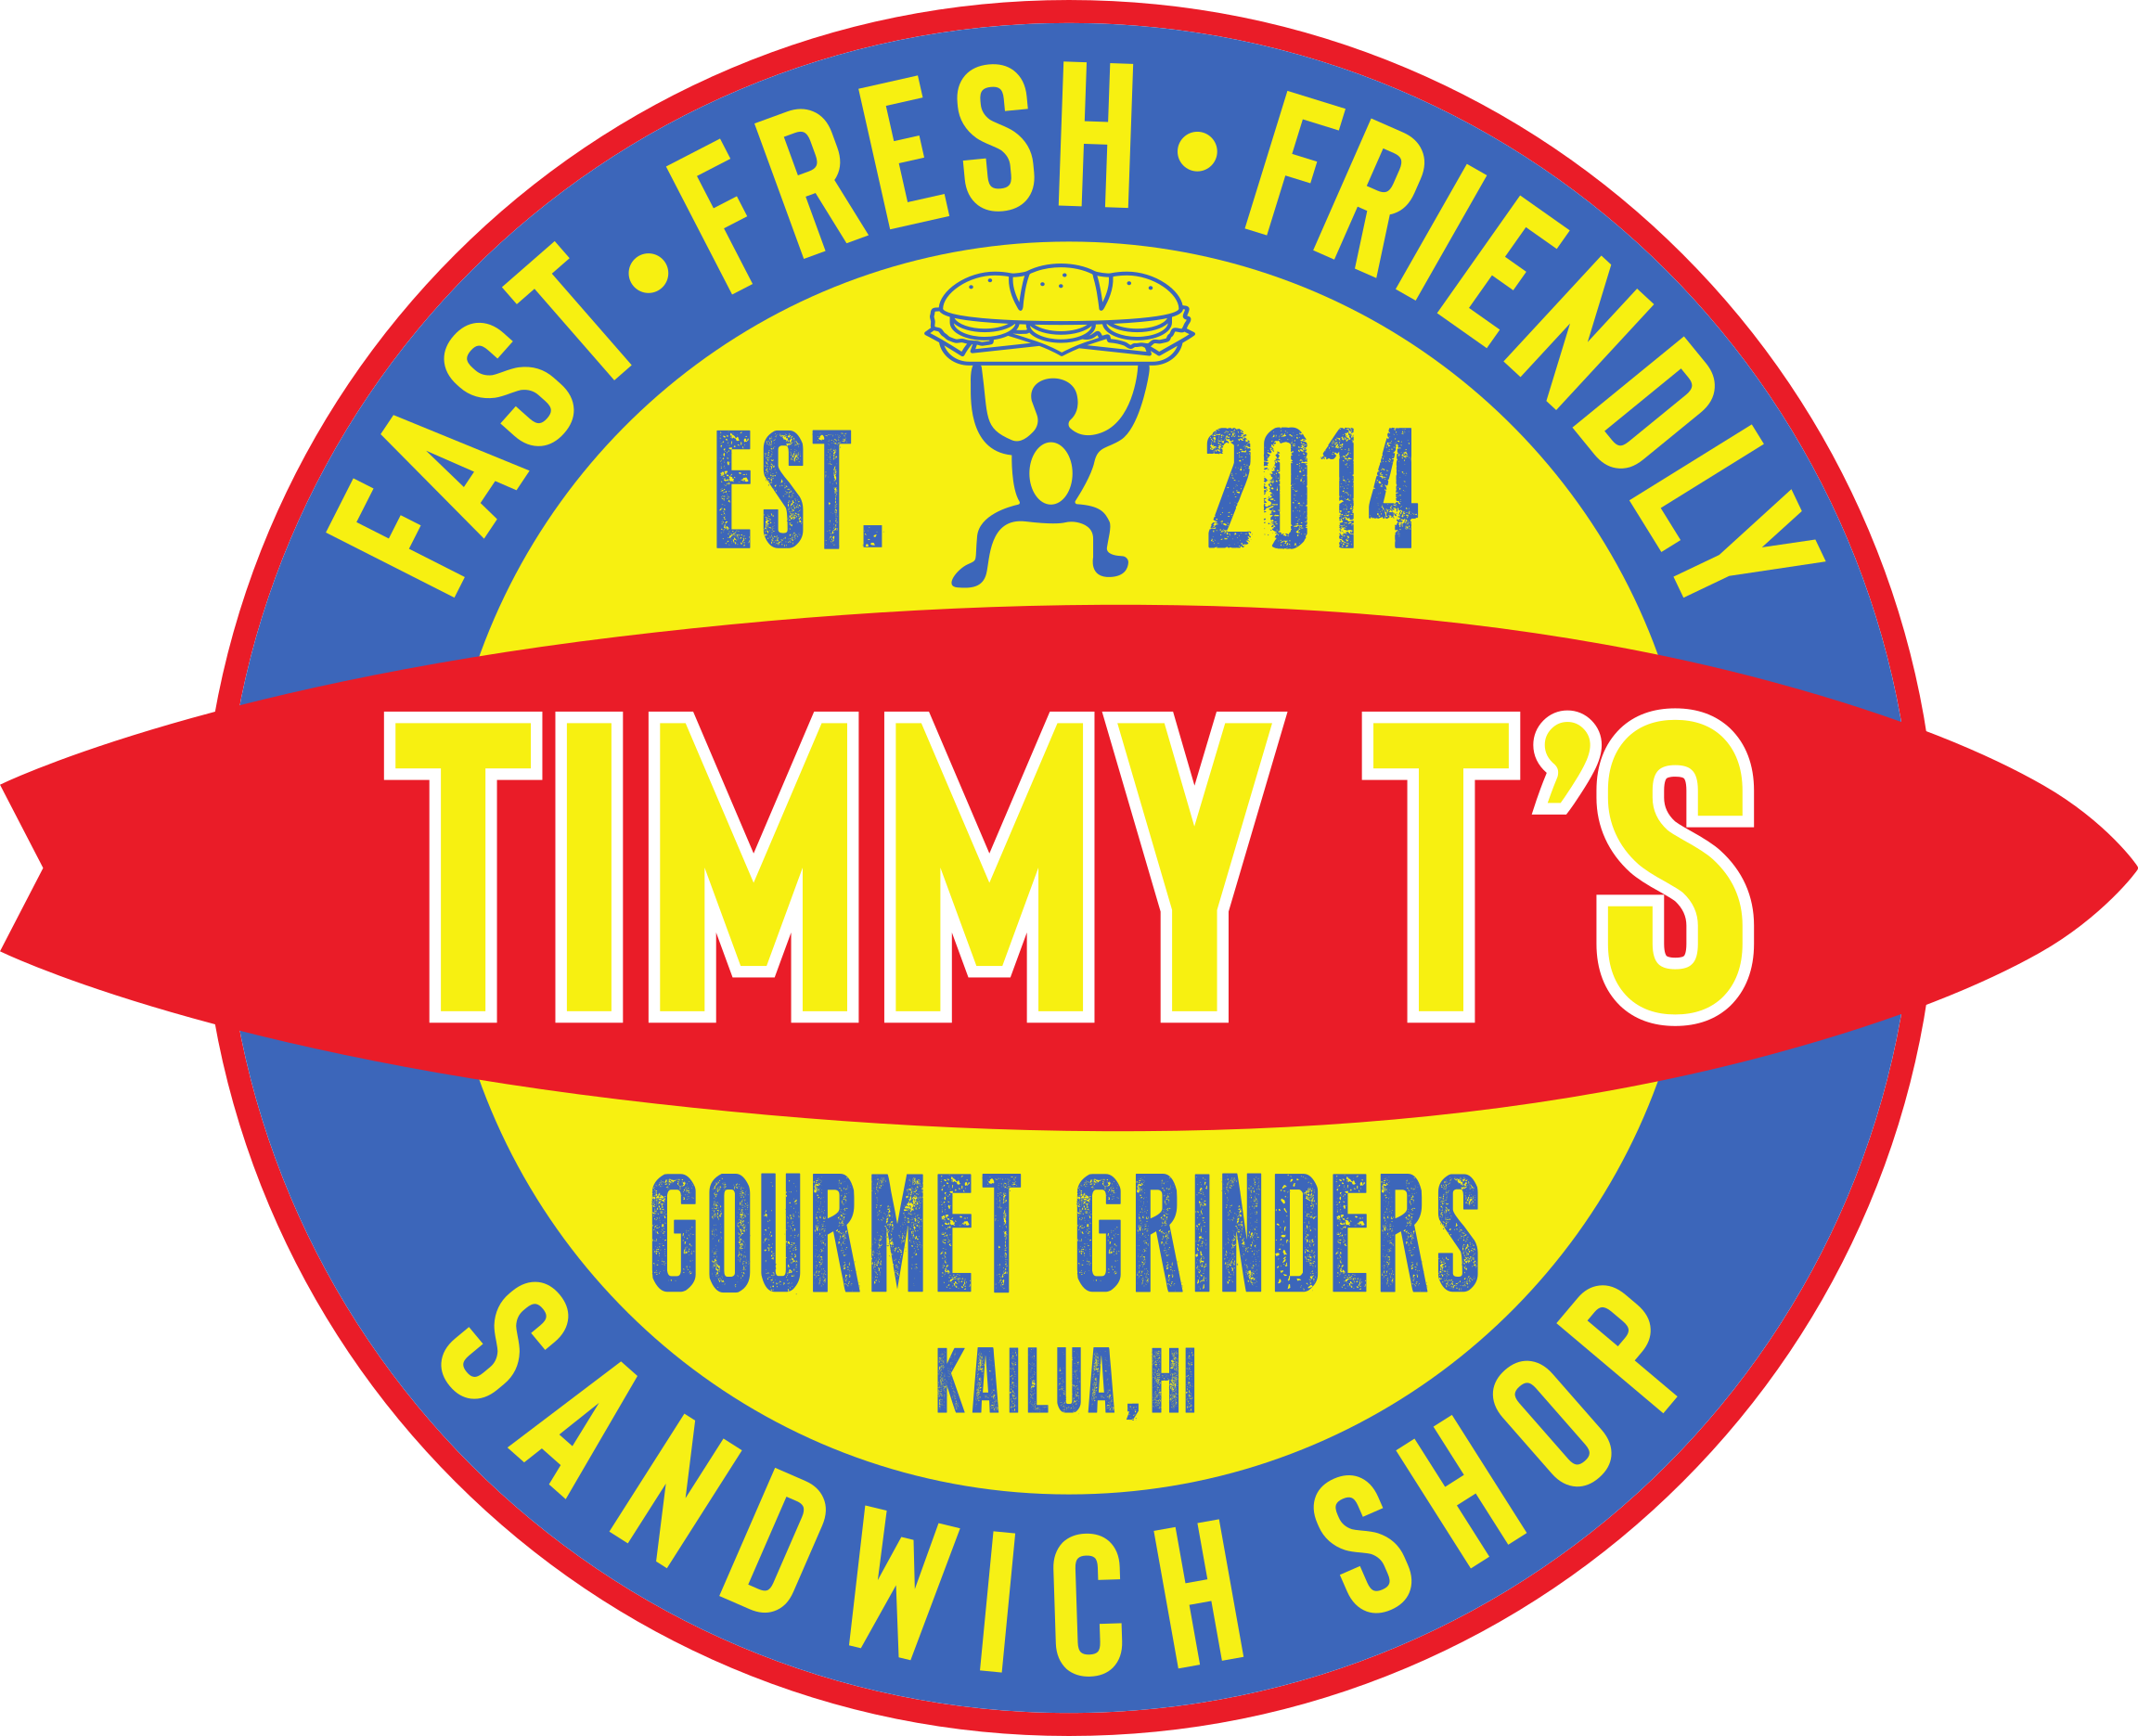 Timmy T's Gourmet Grinders Sandwich Shop Honolulu 930 Valkenburgh Street Honolulu Hawaii 96818